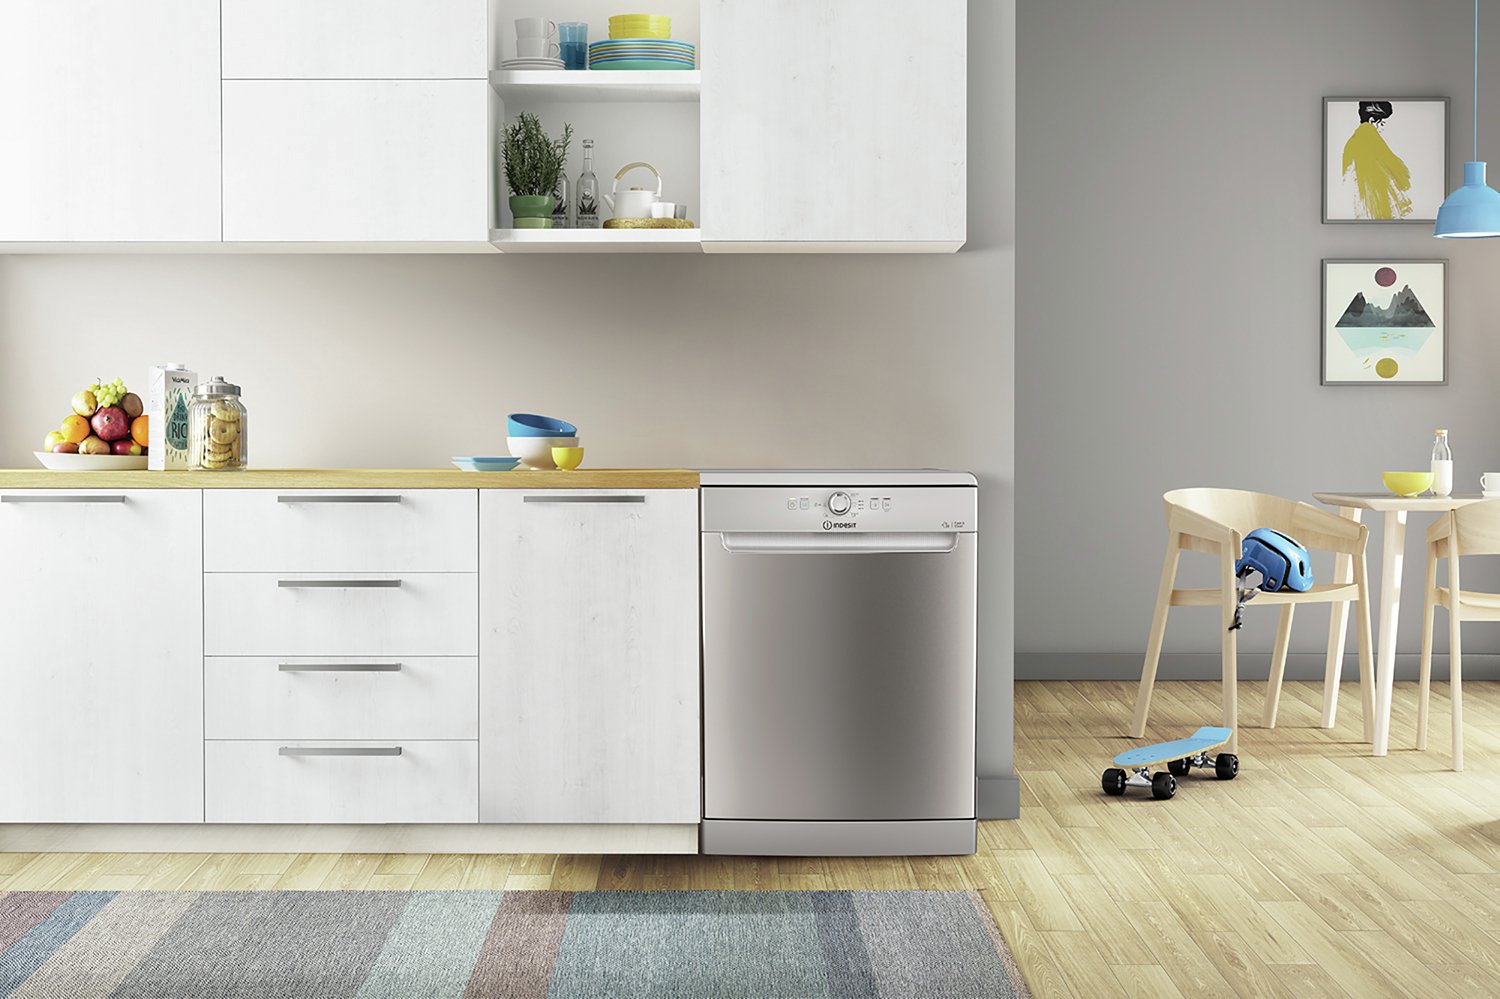 Indesit DFE1B19X Full Size Dishwasher Review